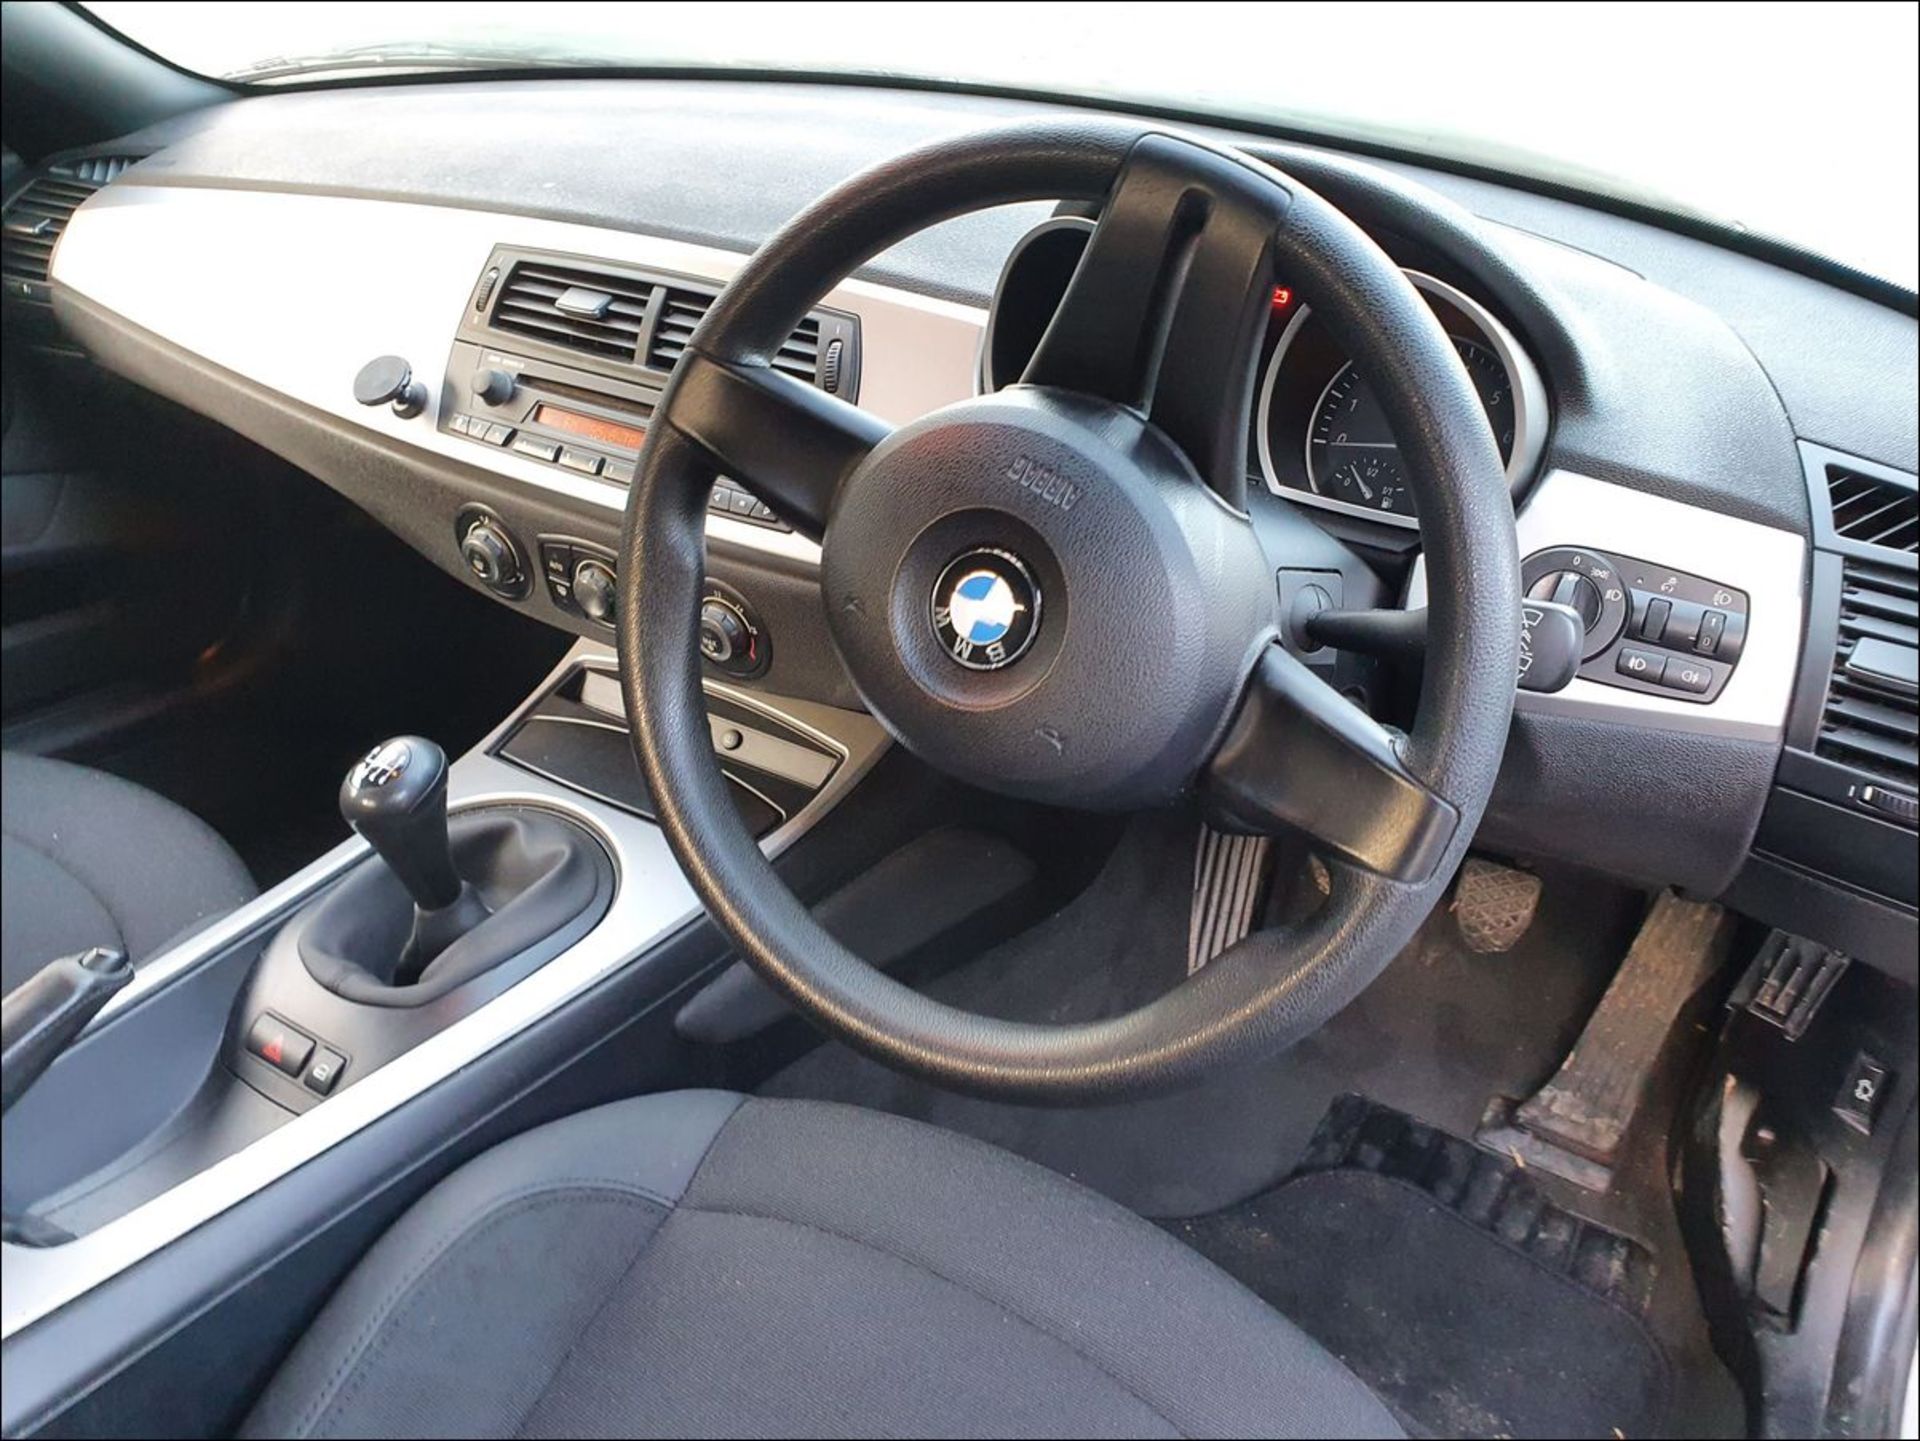 06/56 BMW Z4 SE - 1995cc 2dr Convertible (Silver, 83k) - Image 8 of 10